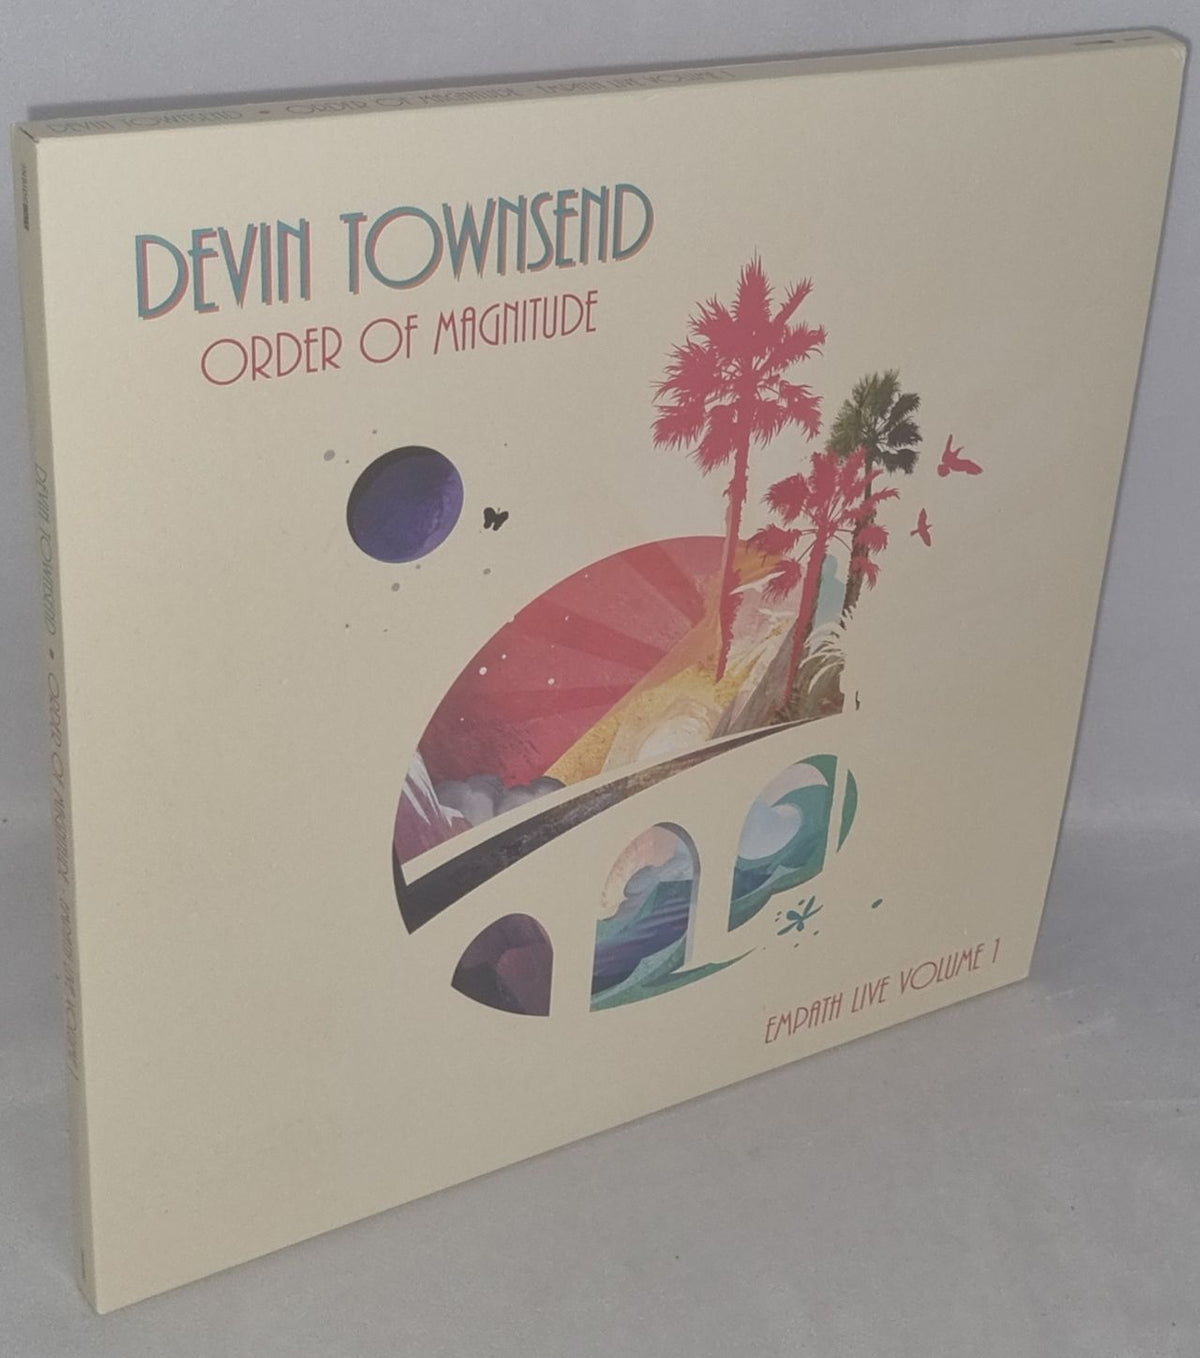 Devin Order Magnitude - Empath Live Volume US 3-LP vinyl — RareVinyl.com